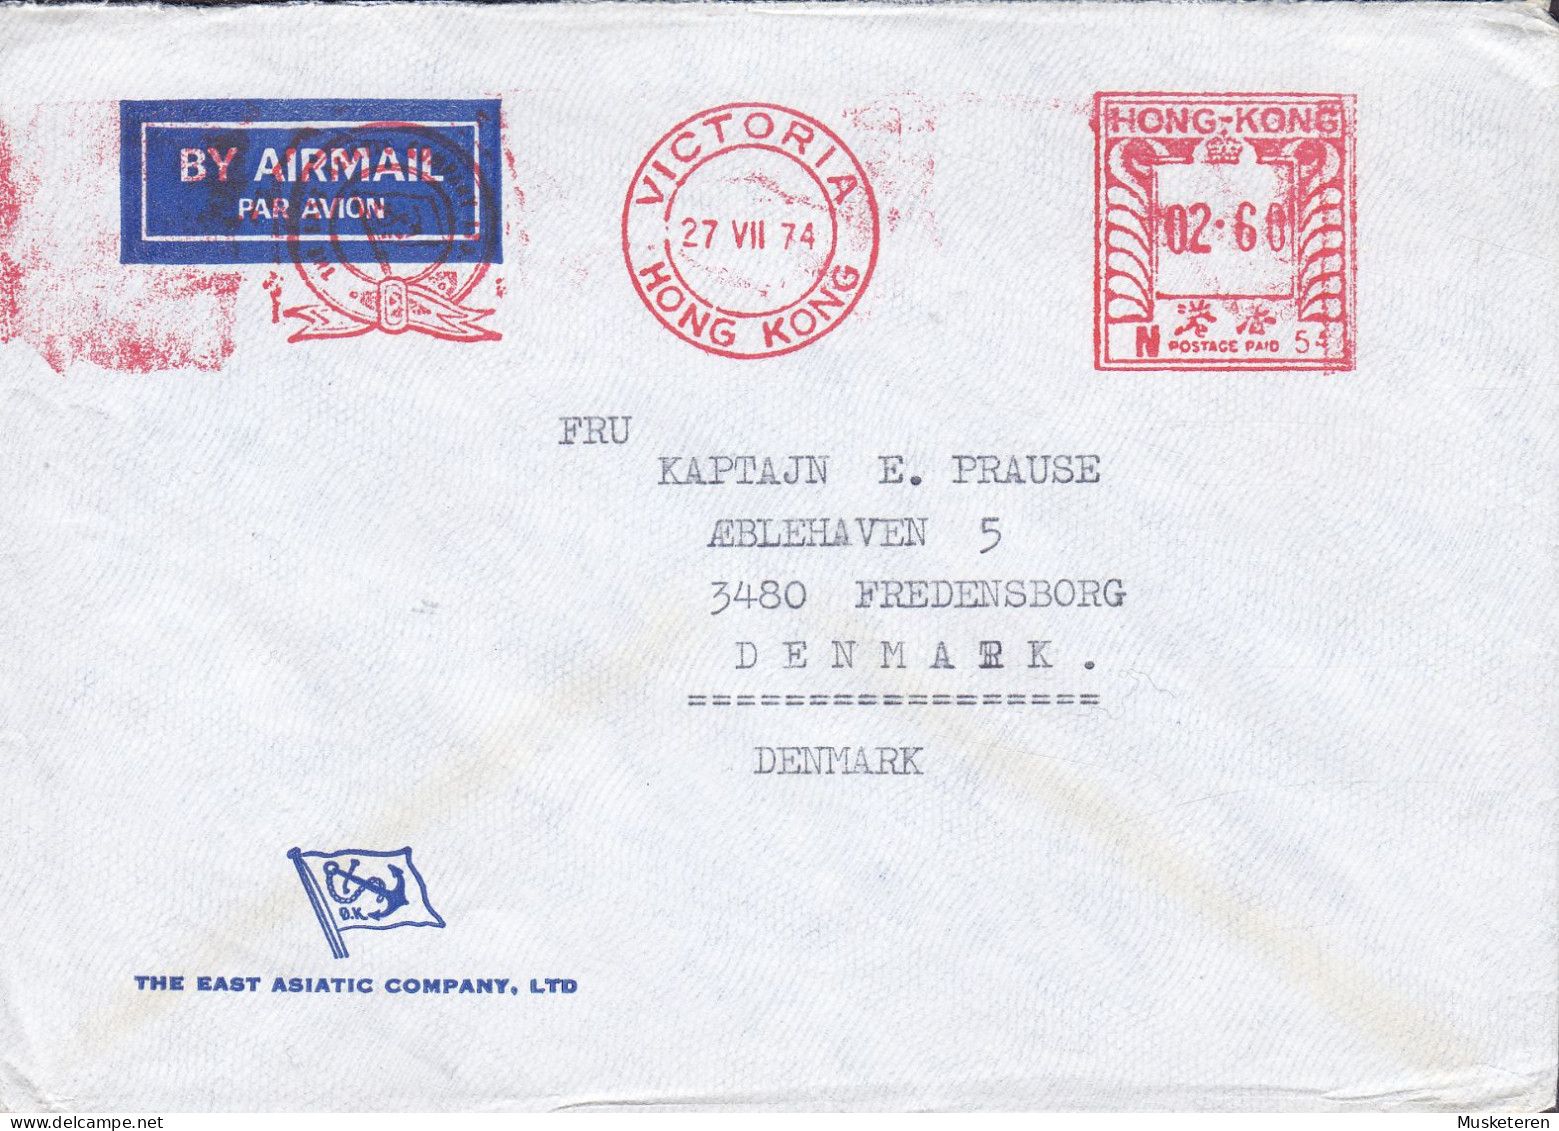 Hong Kong Captain M/S 'JUTLANDIA' THE EAST ASIATIC COMPANY, VICTORIA 1974 Meter Ships Mail Cover FREDENSBORG Denmark - Cartas & Documentos